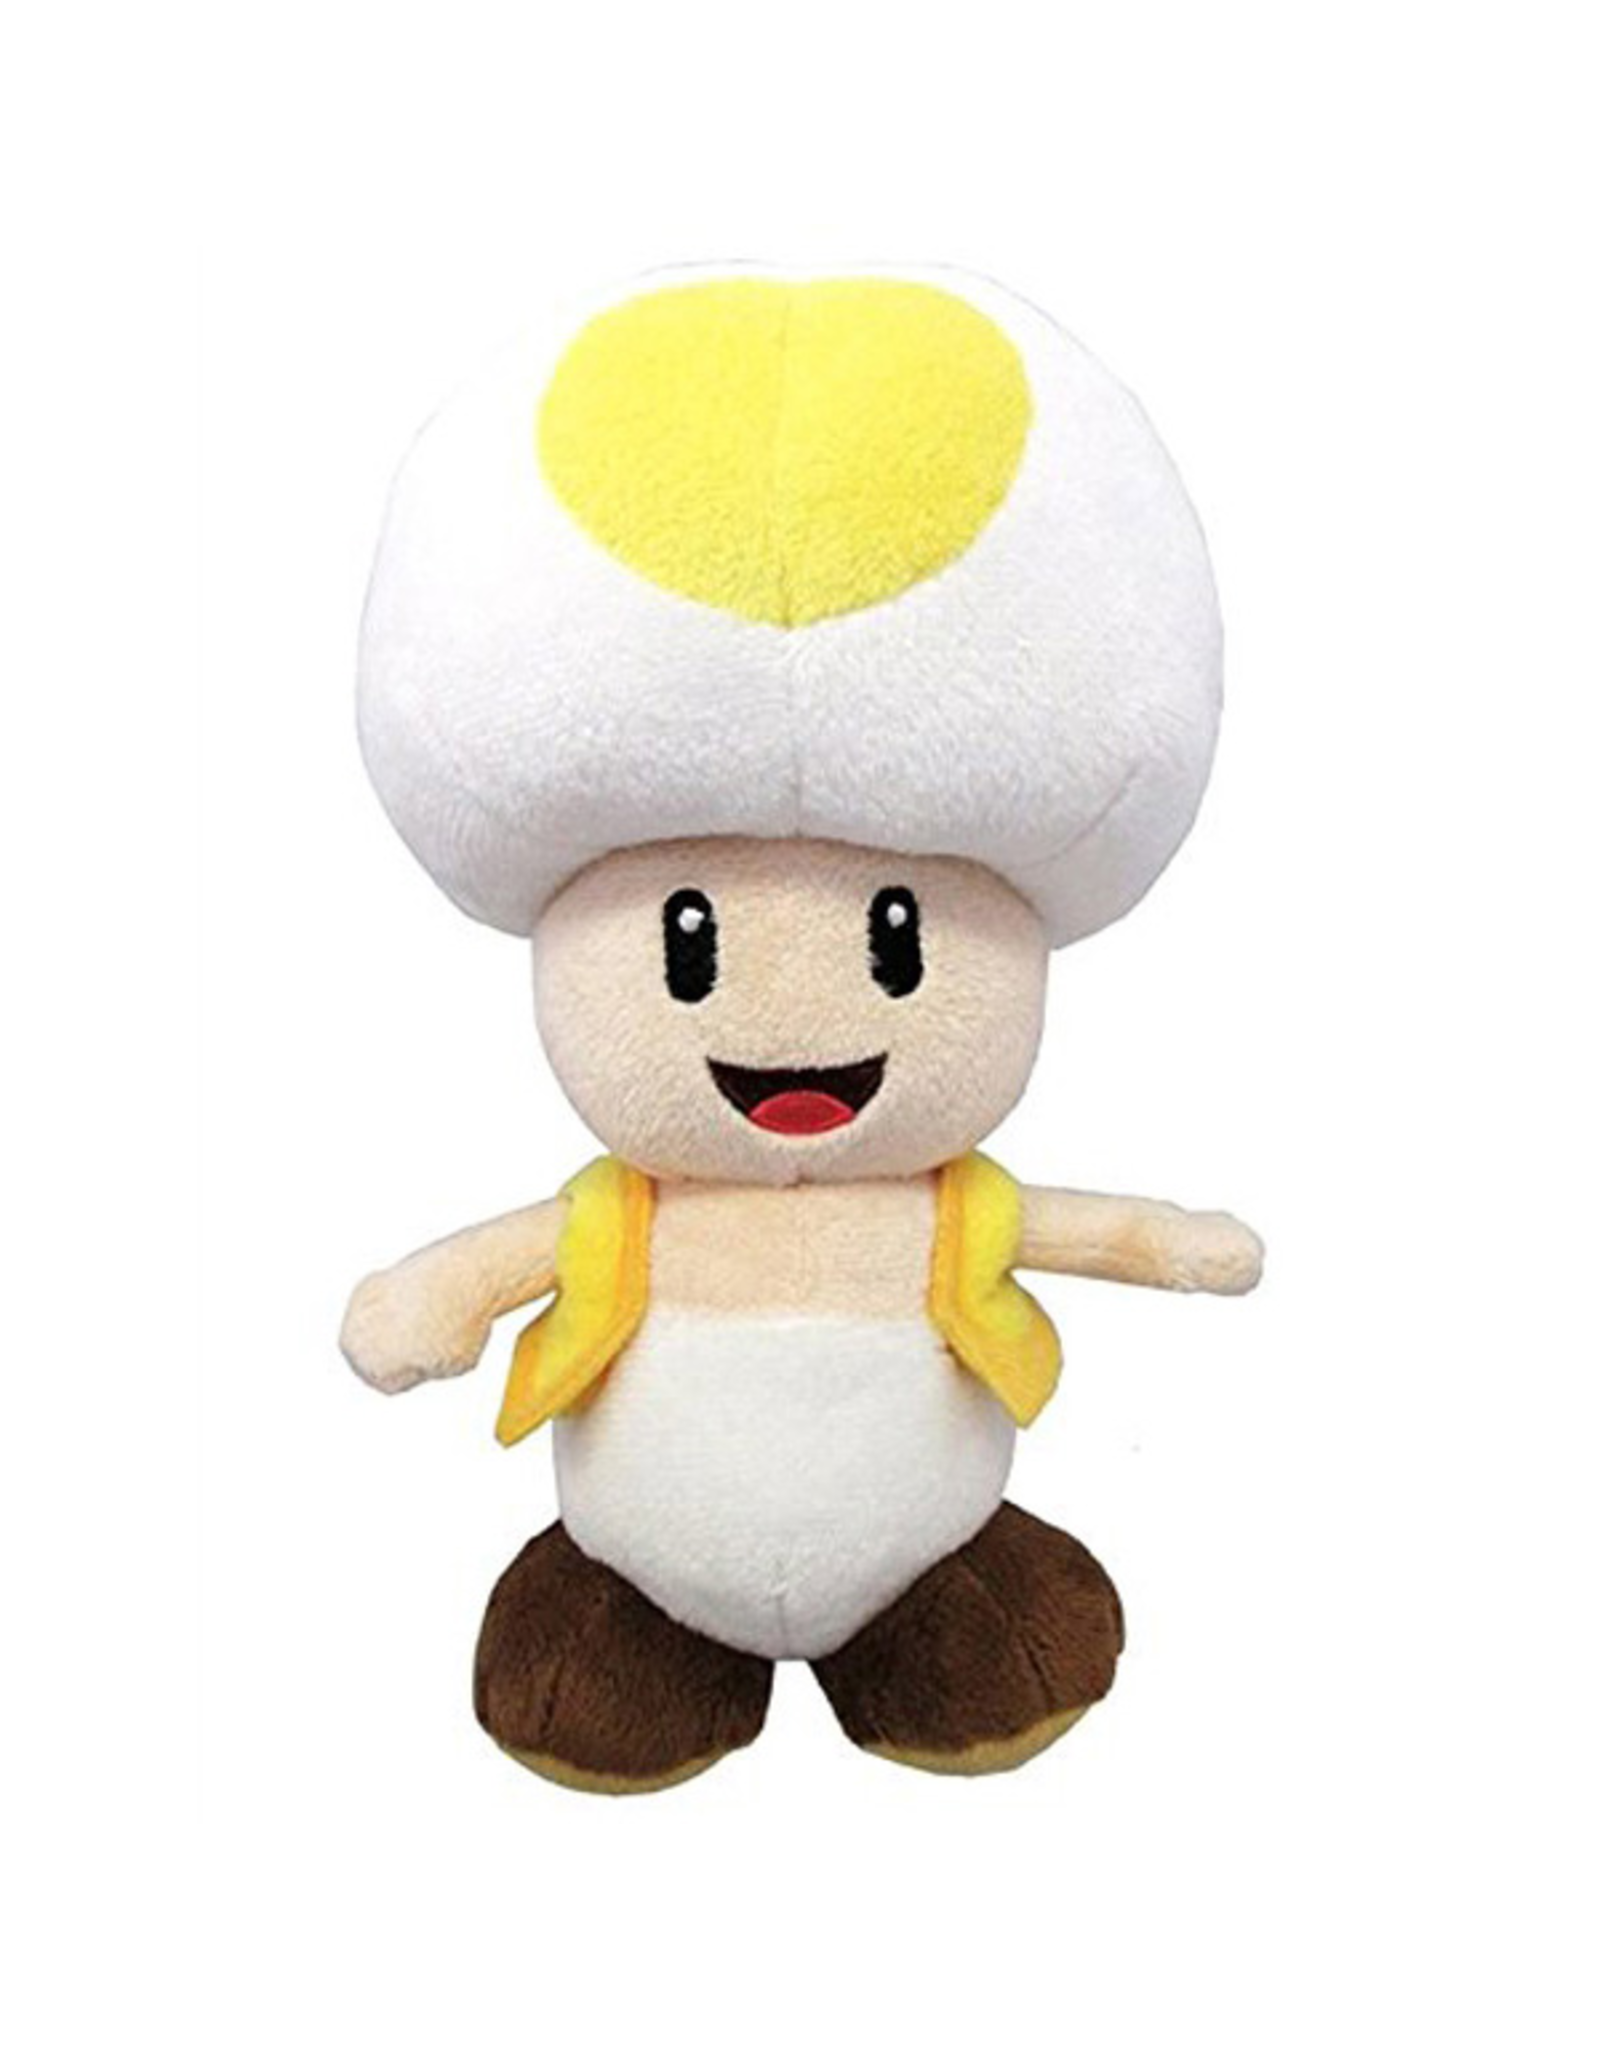 Little Buddy Little Buddy - Super Mario Bros - Yellow Toad - 8" Plush